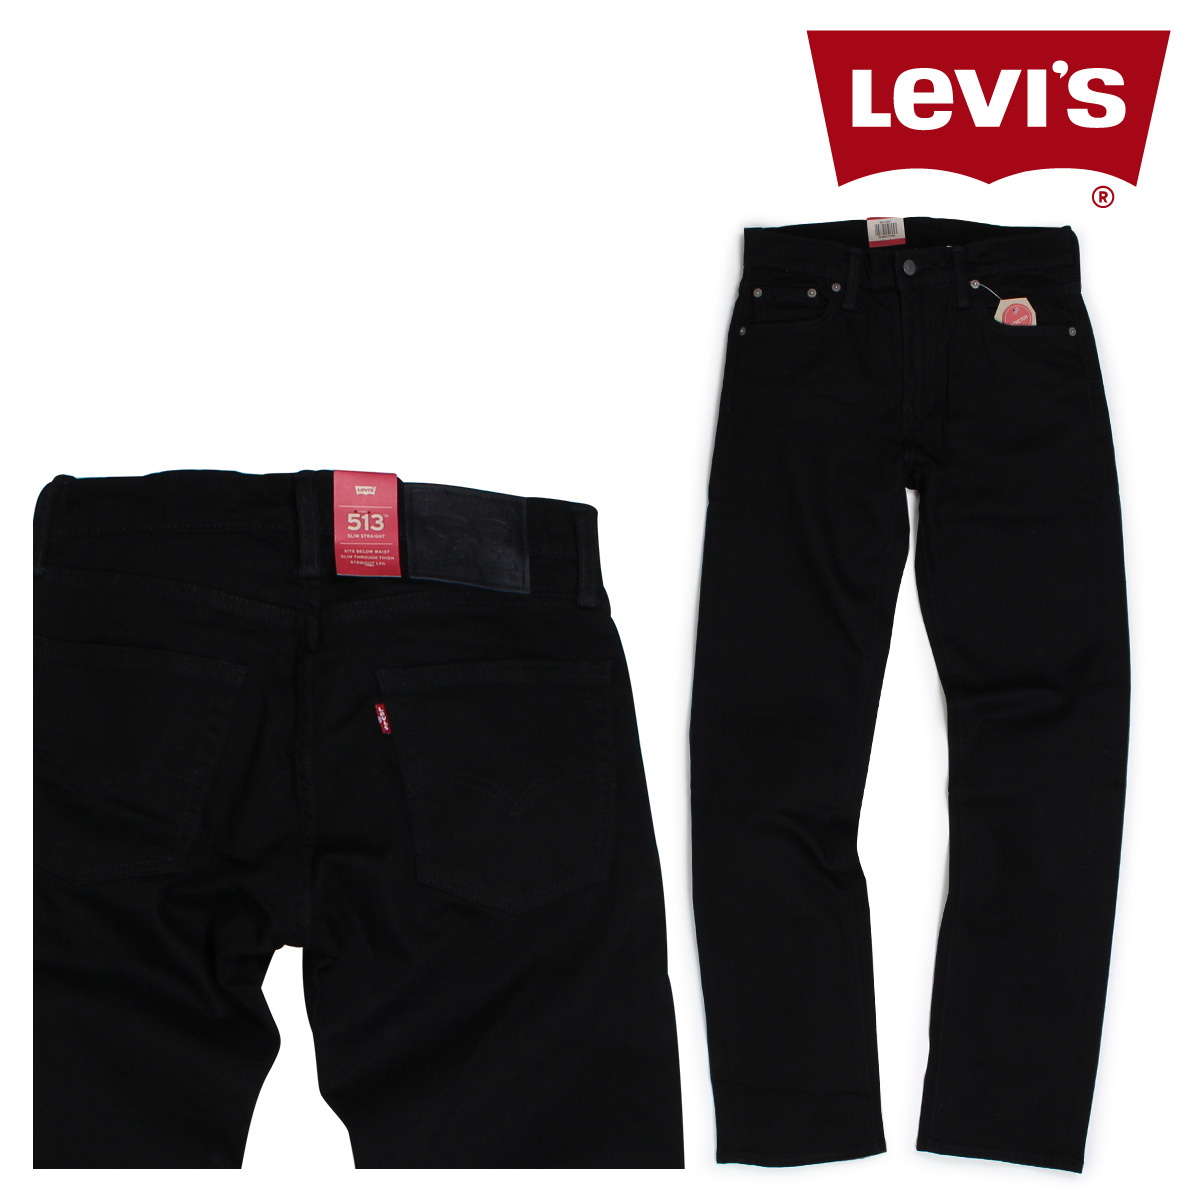 levi's 513 black jeans